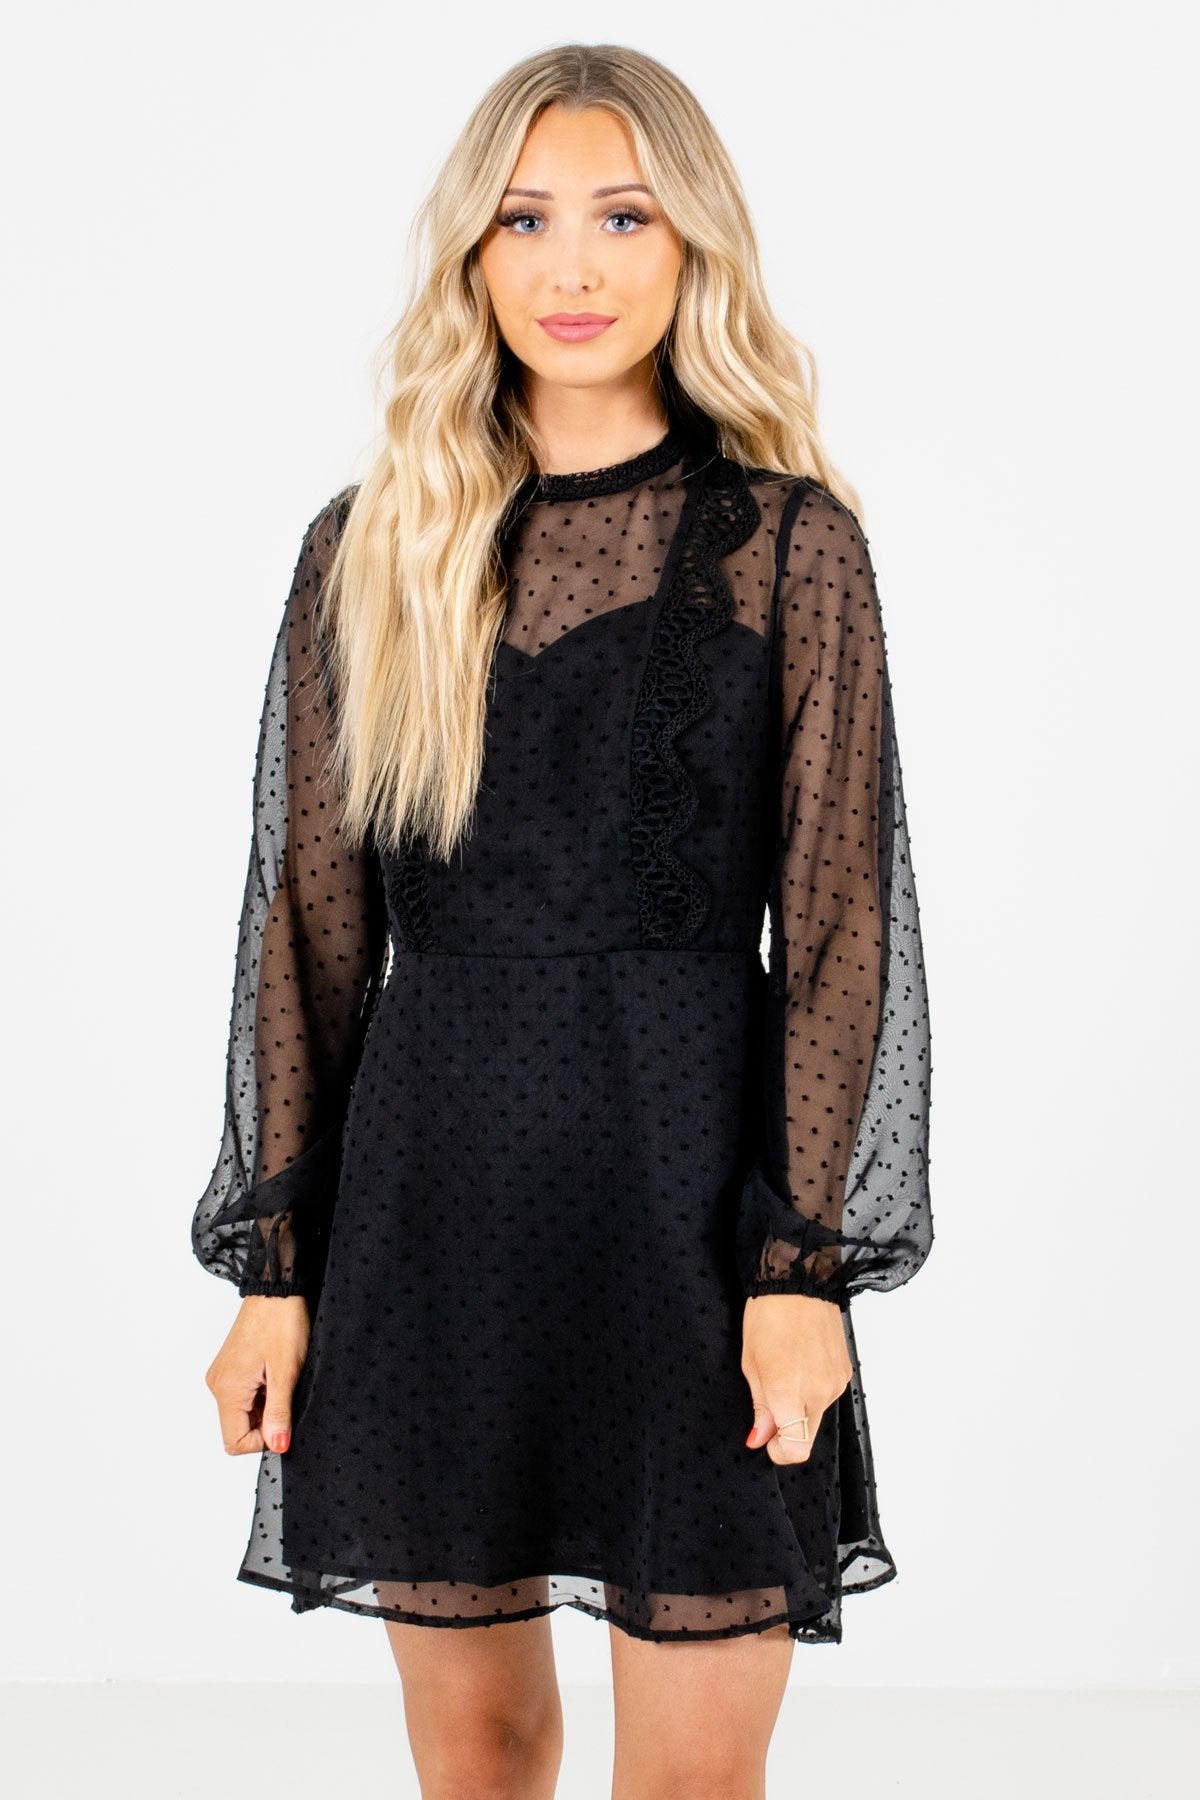 Black Polka Dot Textured Material Boutique Mini Dresses for Women